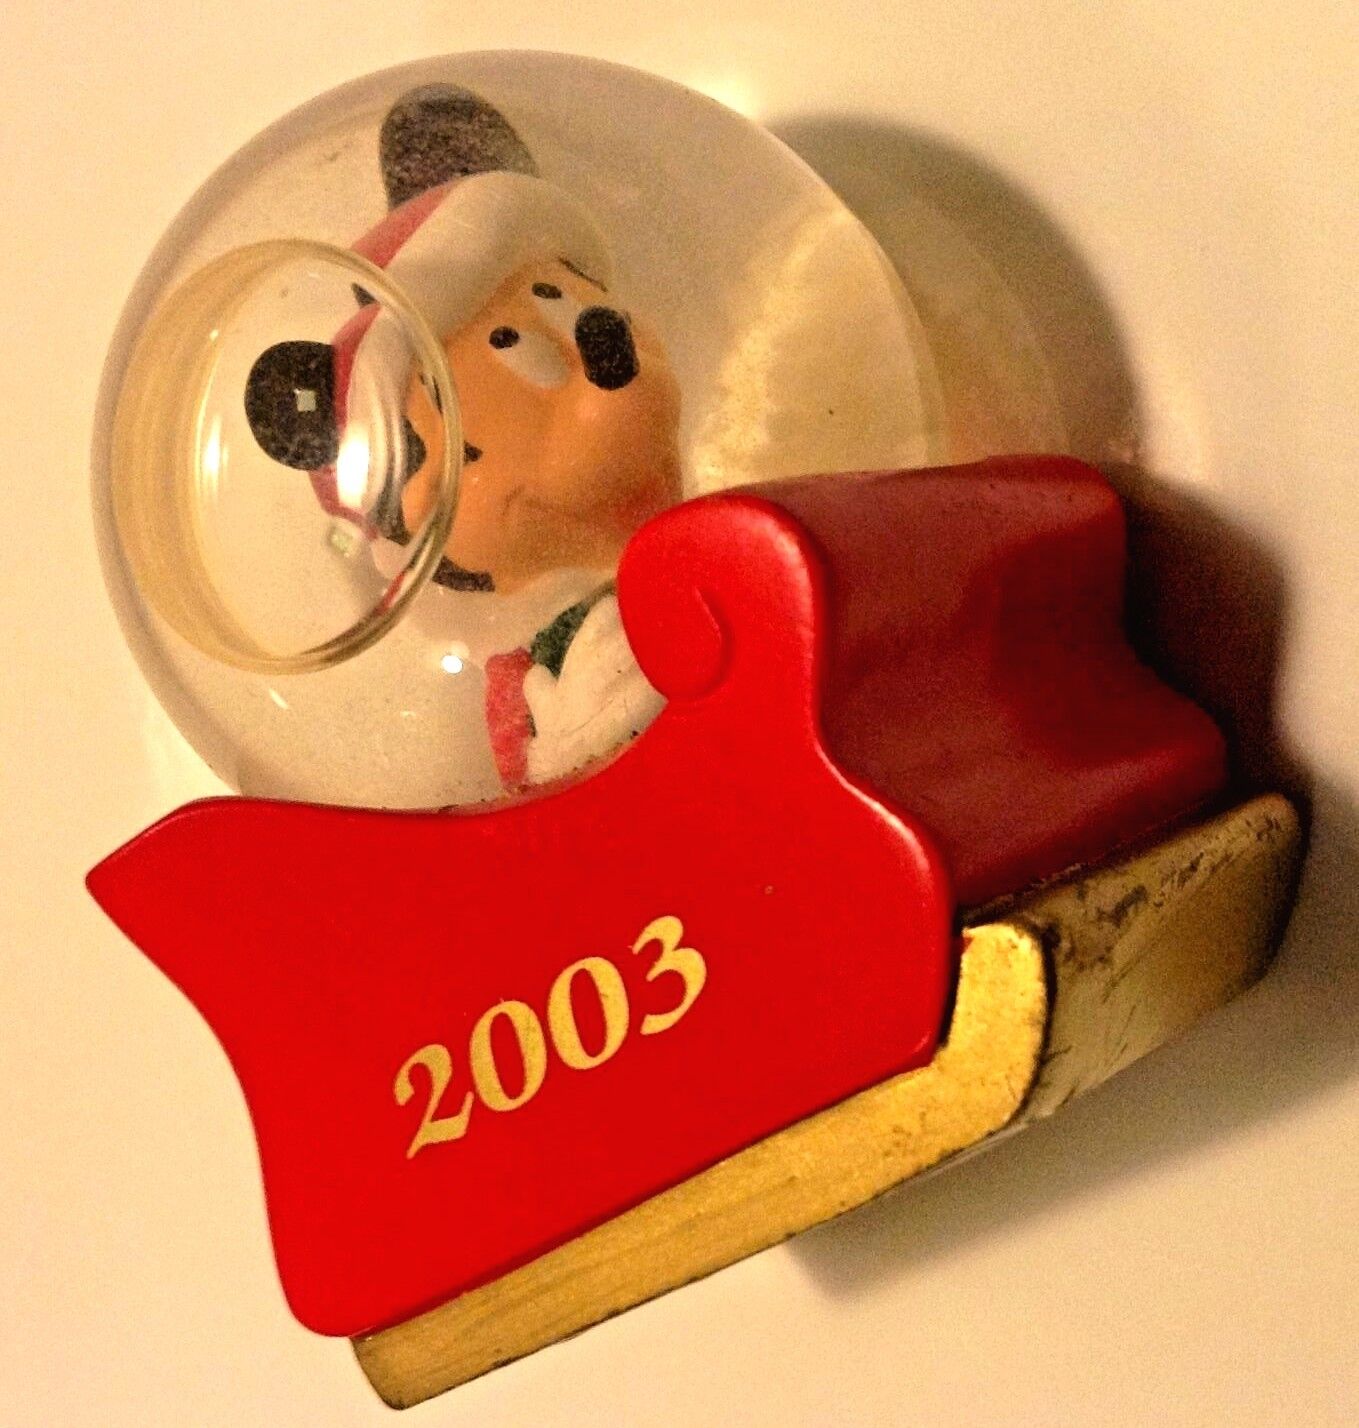 2003 Jcpenney Mickey Mouse in a Sleigh Disney Snowglobe mini globe